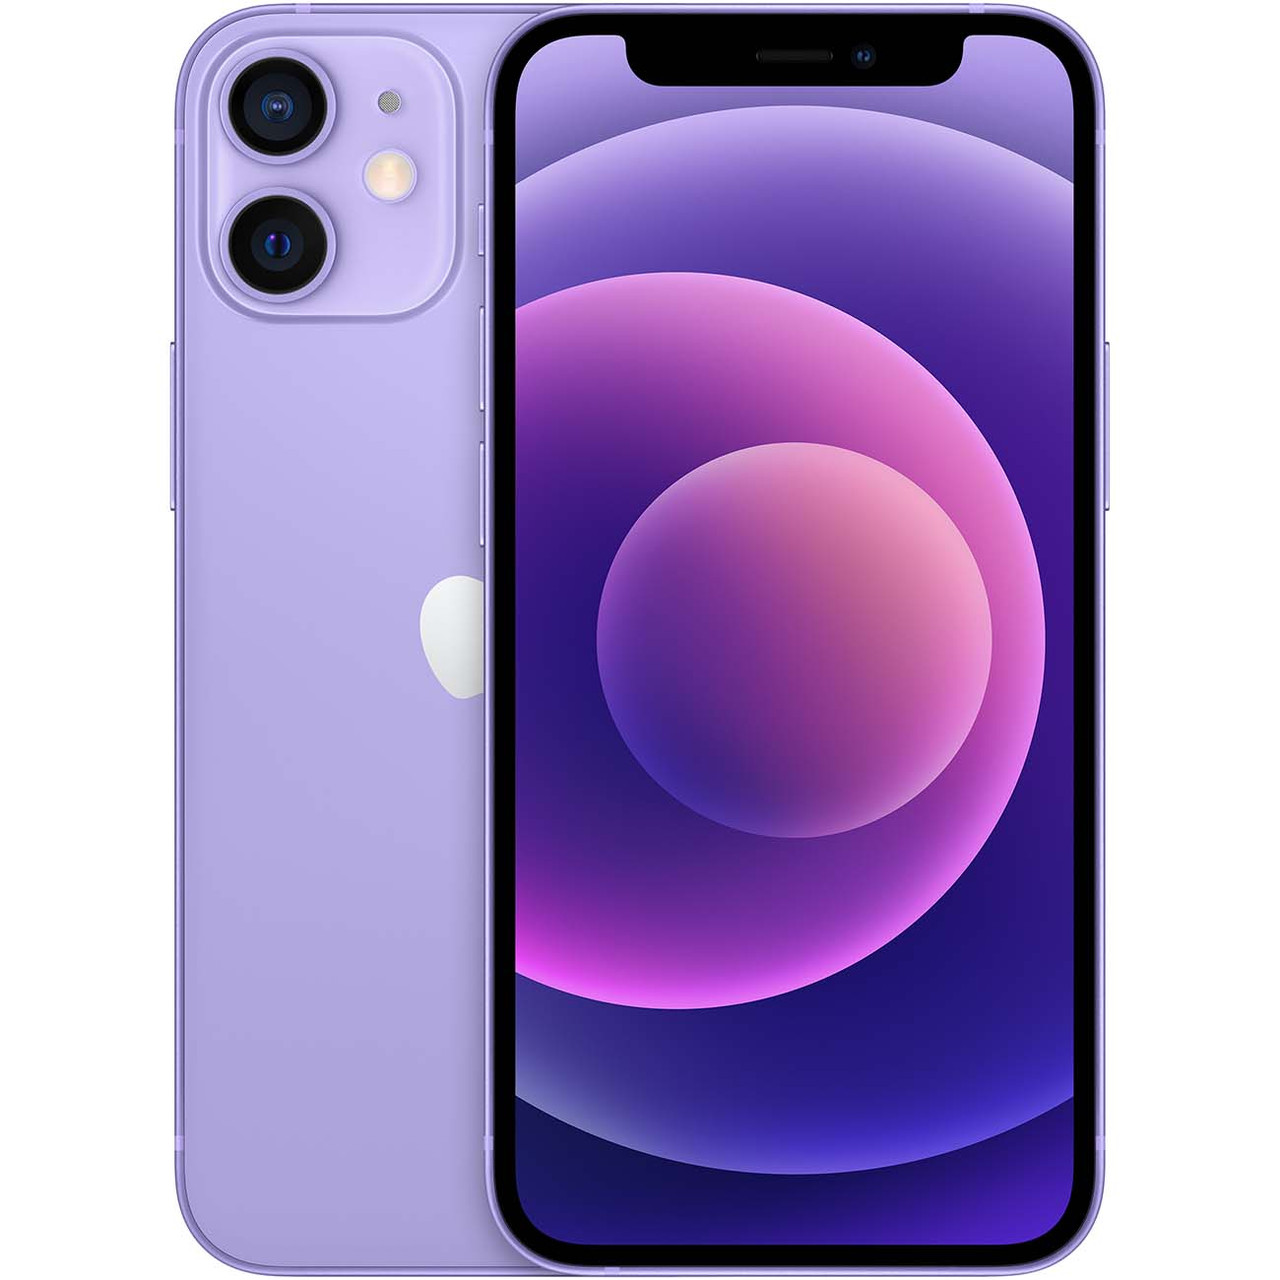 Смартфон Apple iPhone 12 mini 256GB Фиолетовый